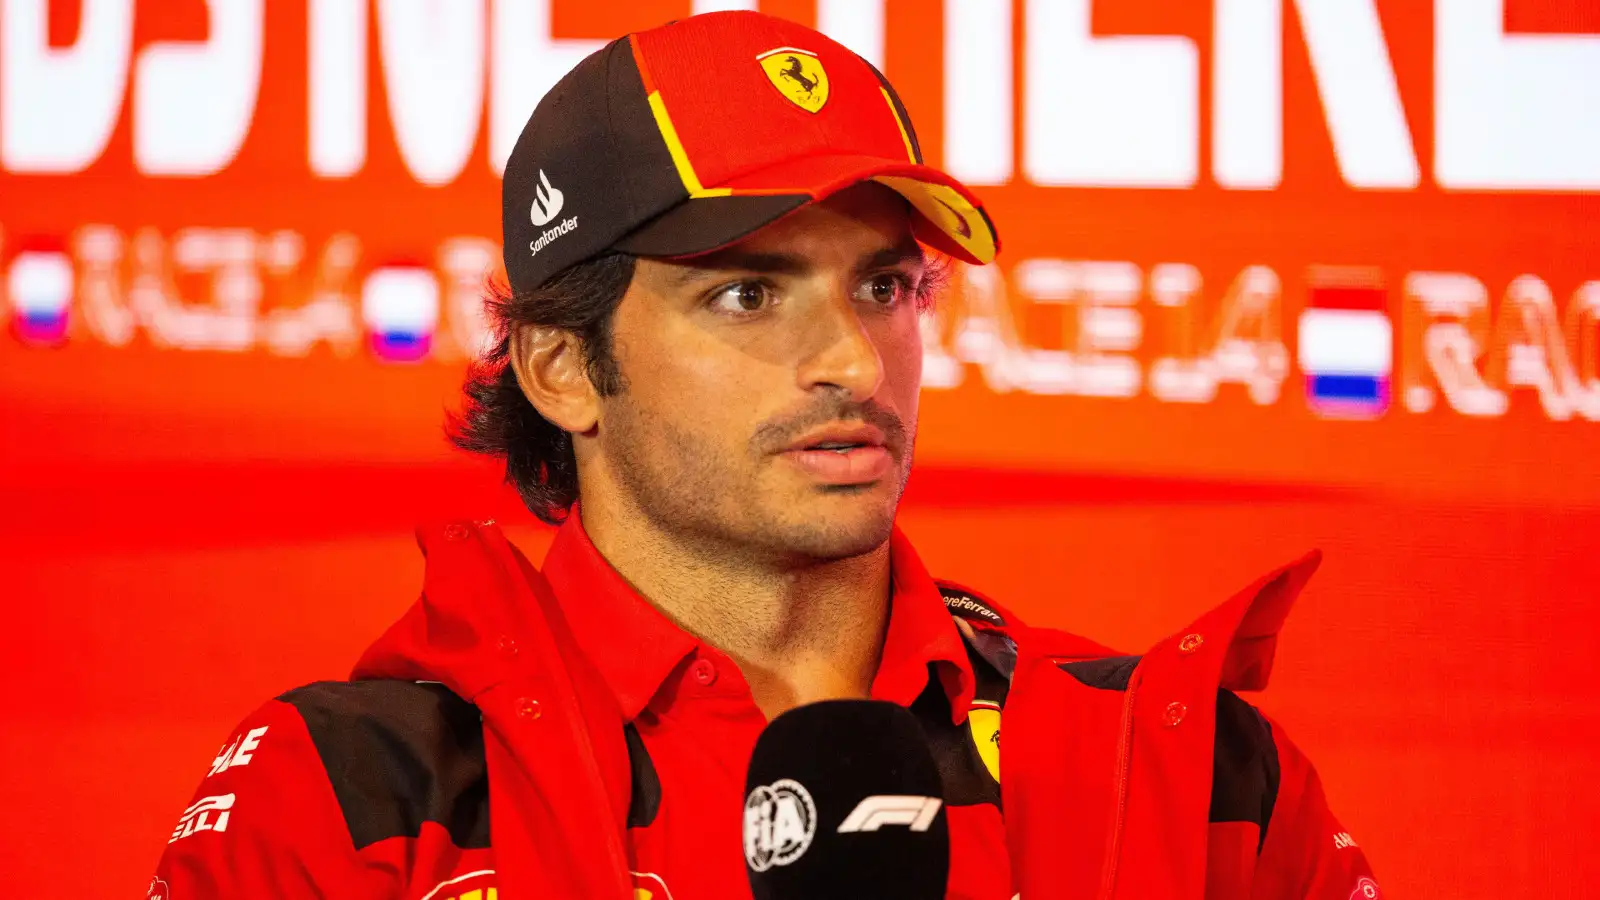 Zandvoort: Carlos Sainz, Ferrari driver, in attendance at the press conference ahead of the Dutch Grand Prix.